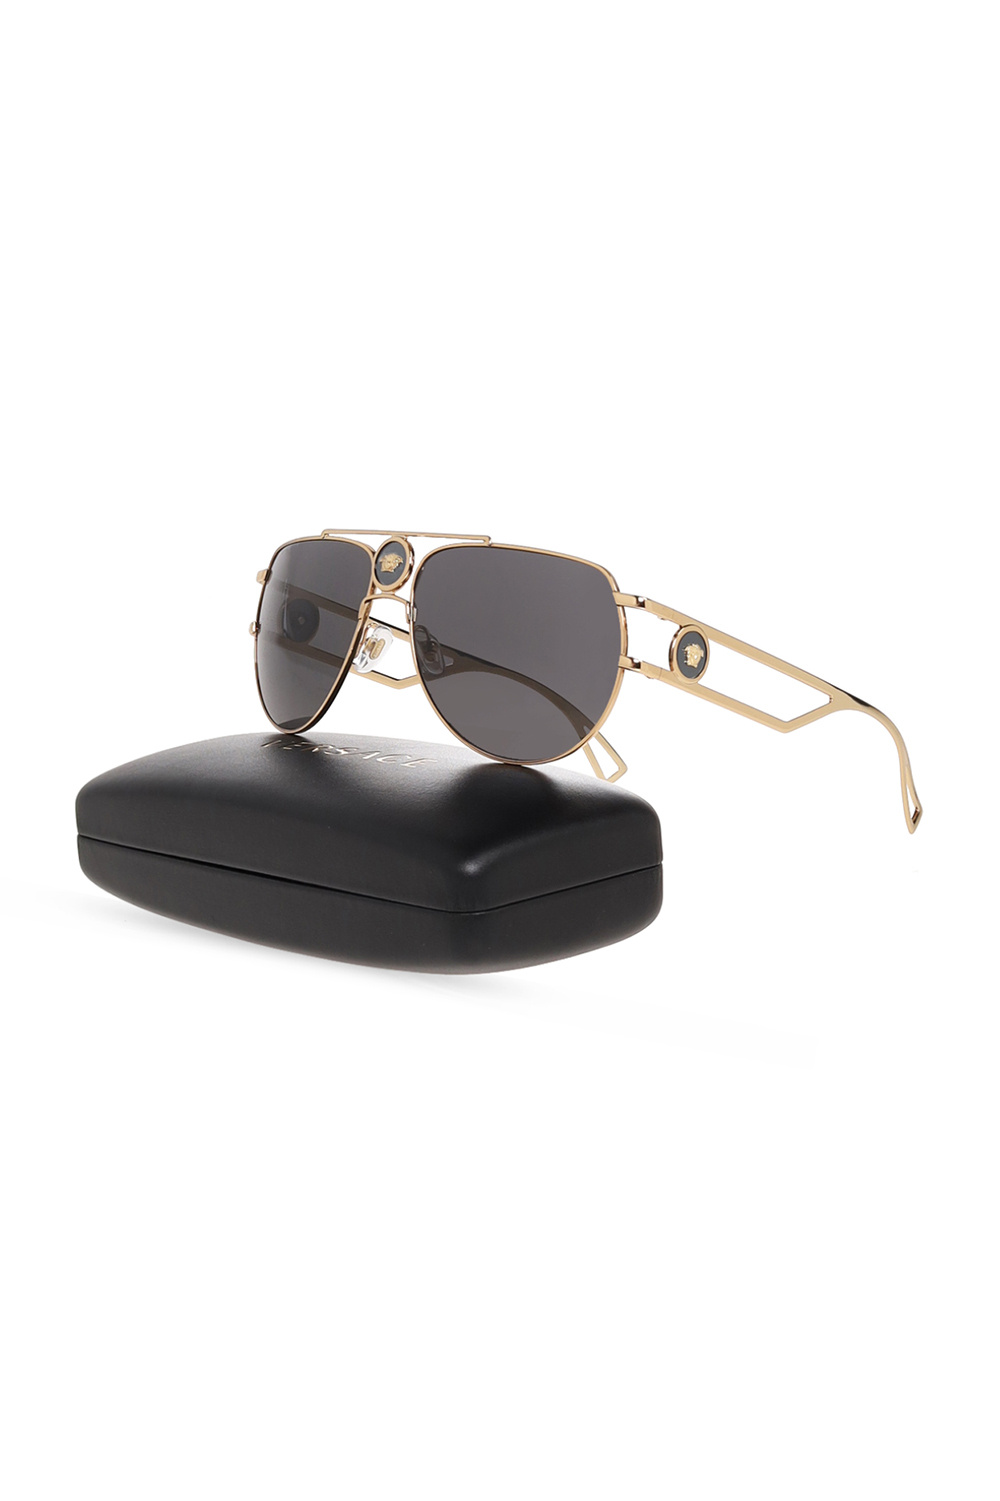 Versace garrett leight hampton thierry sunglasses 2001 46 chpgn